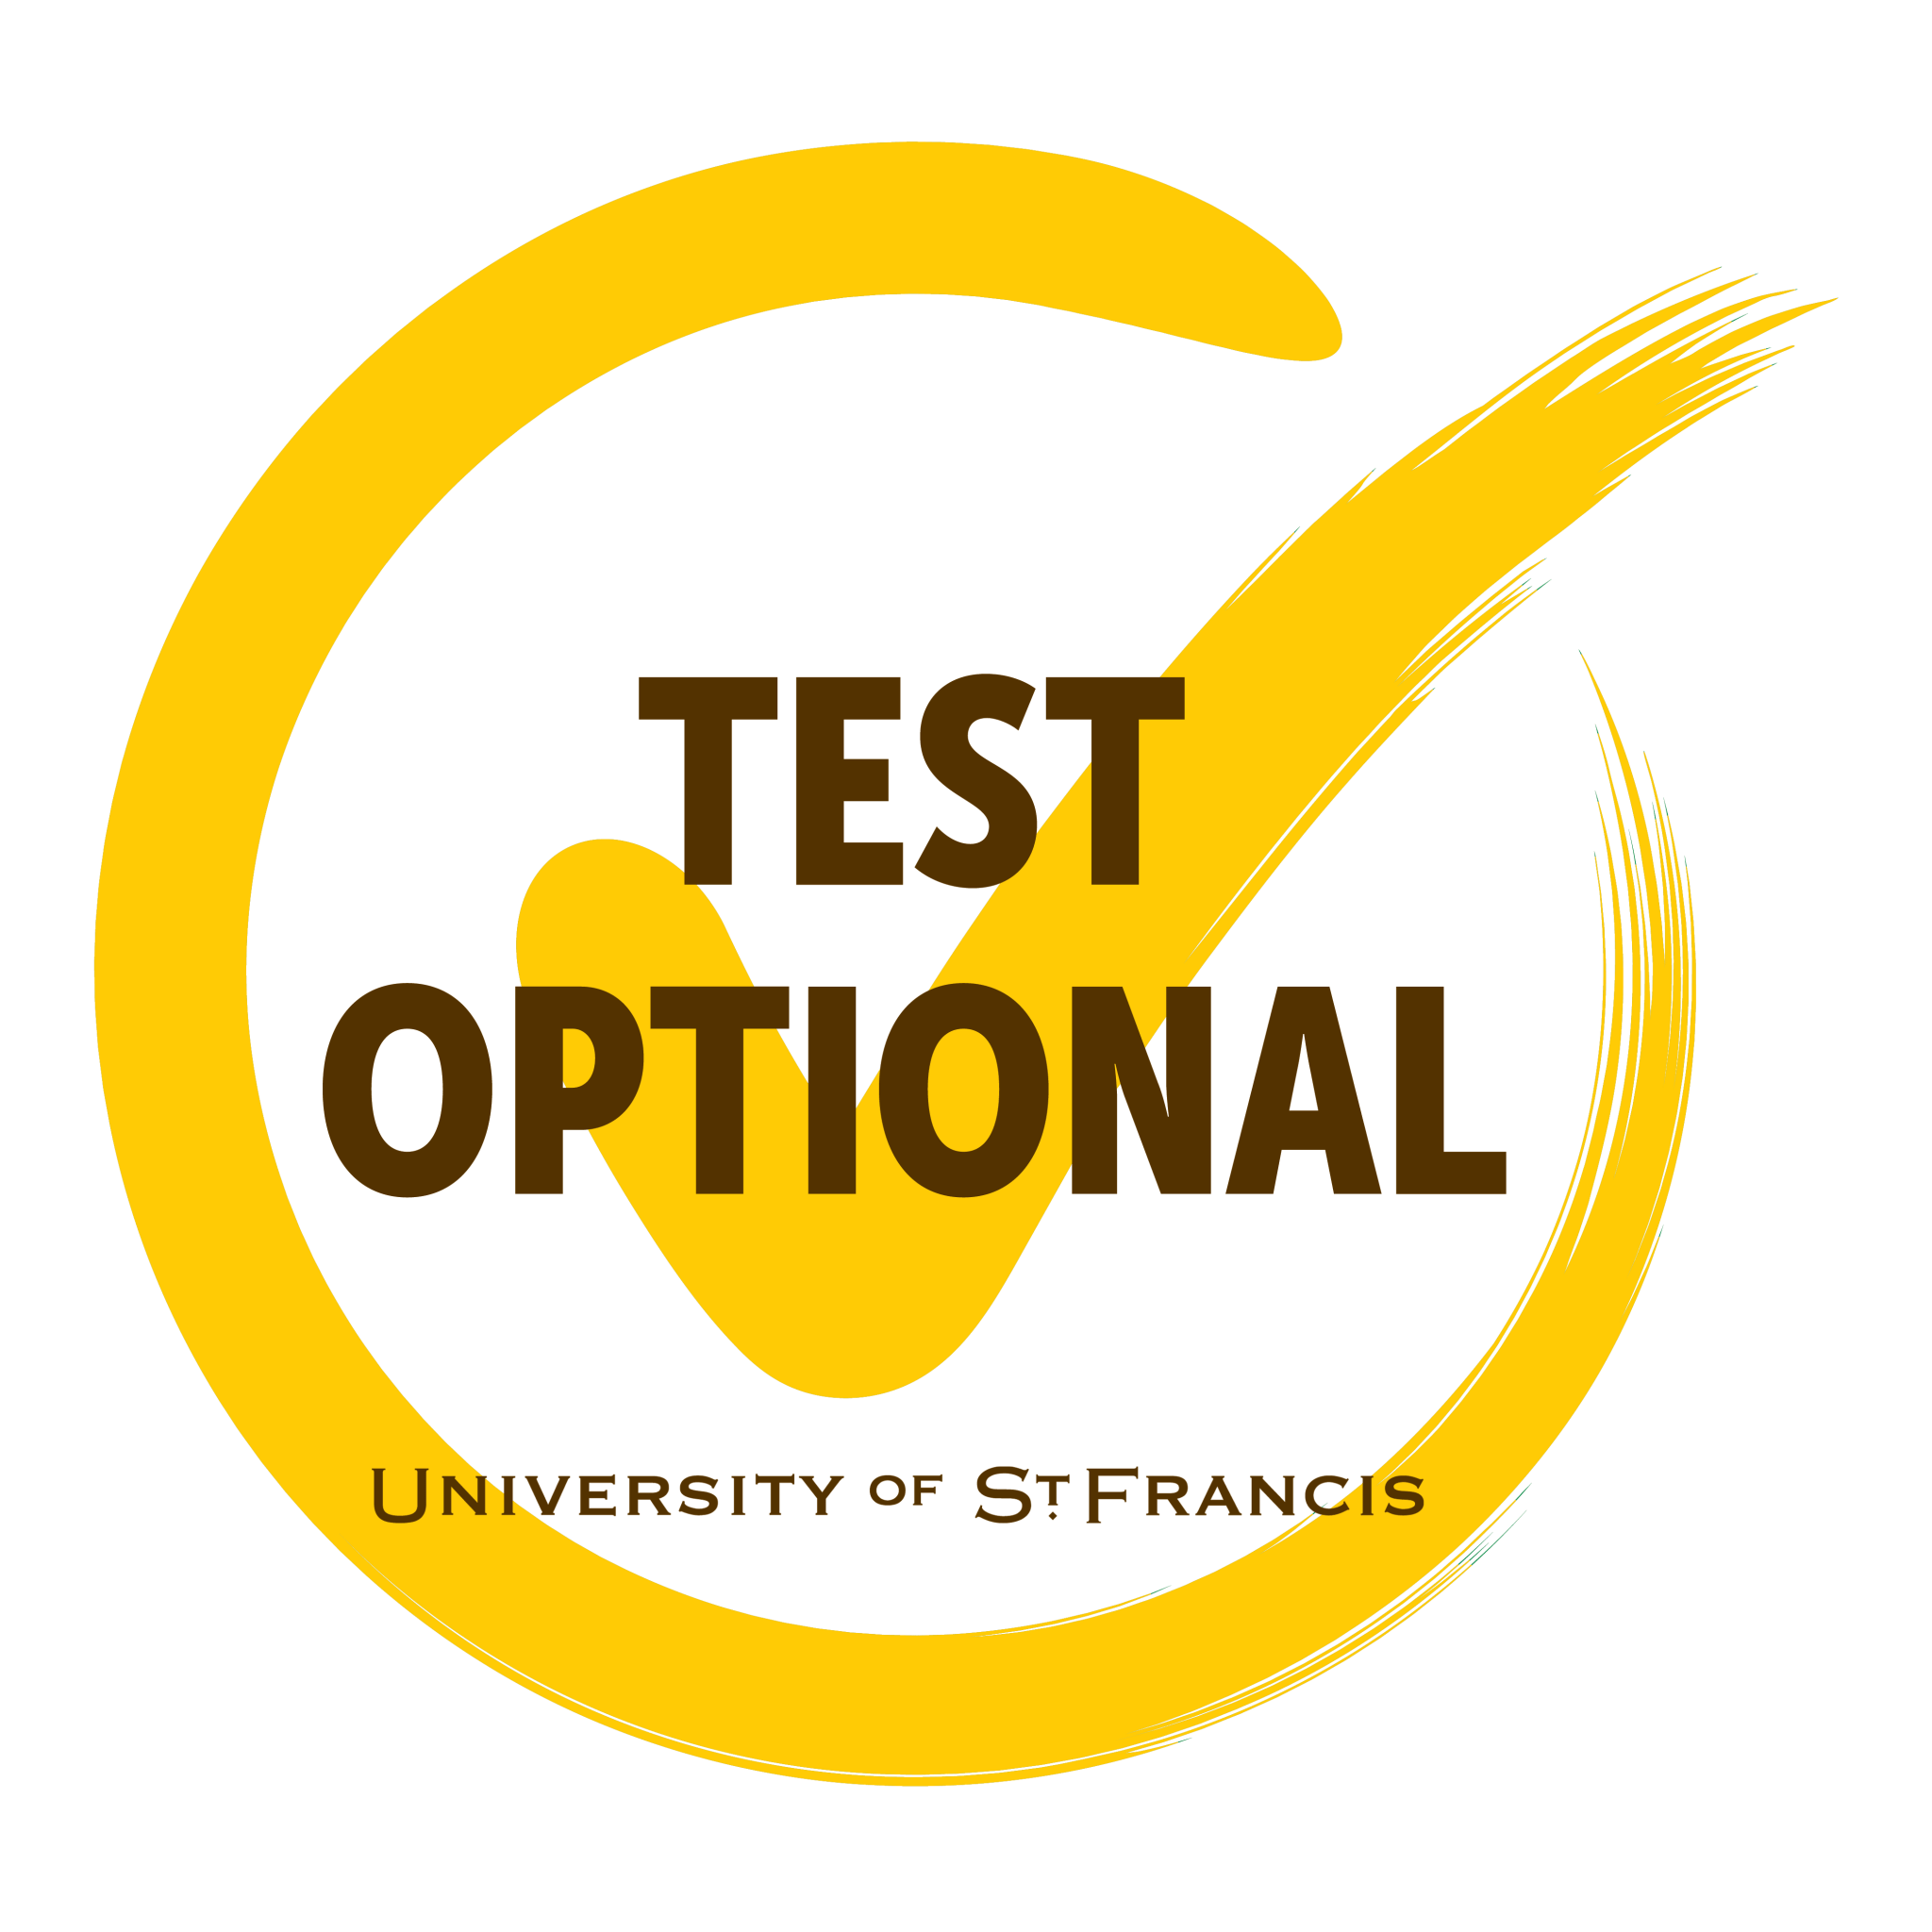 Test Optional University of St. Francis